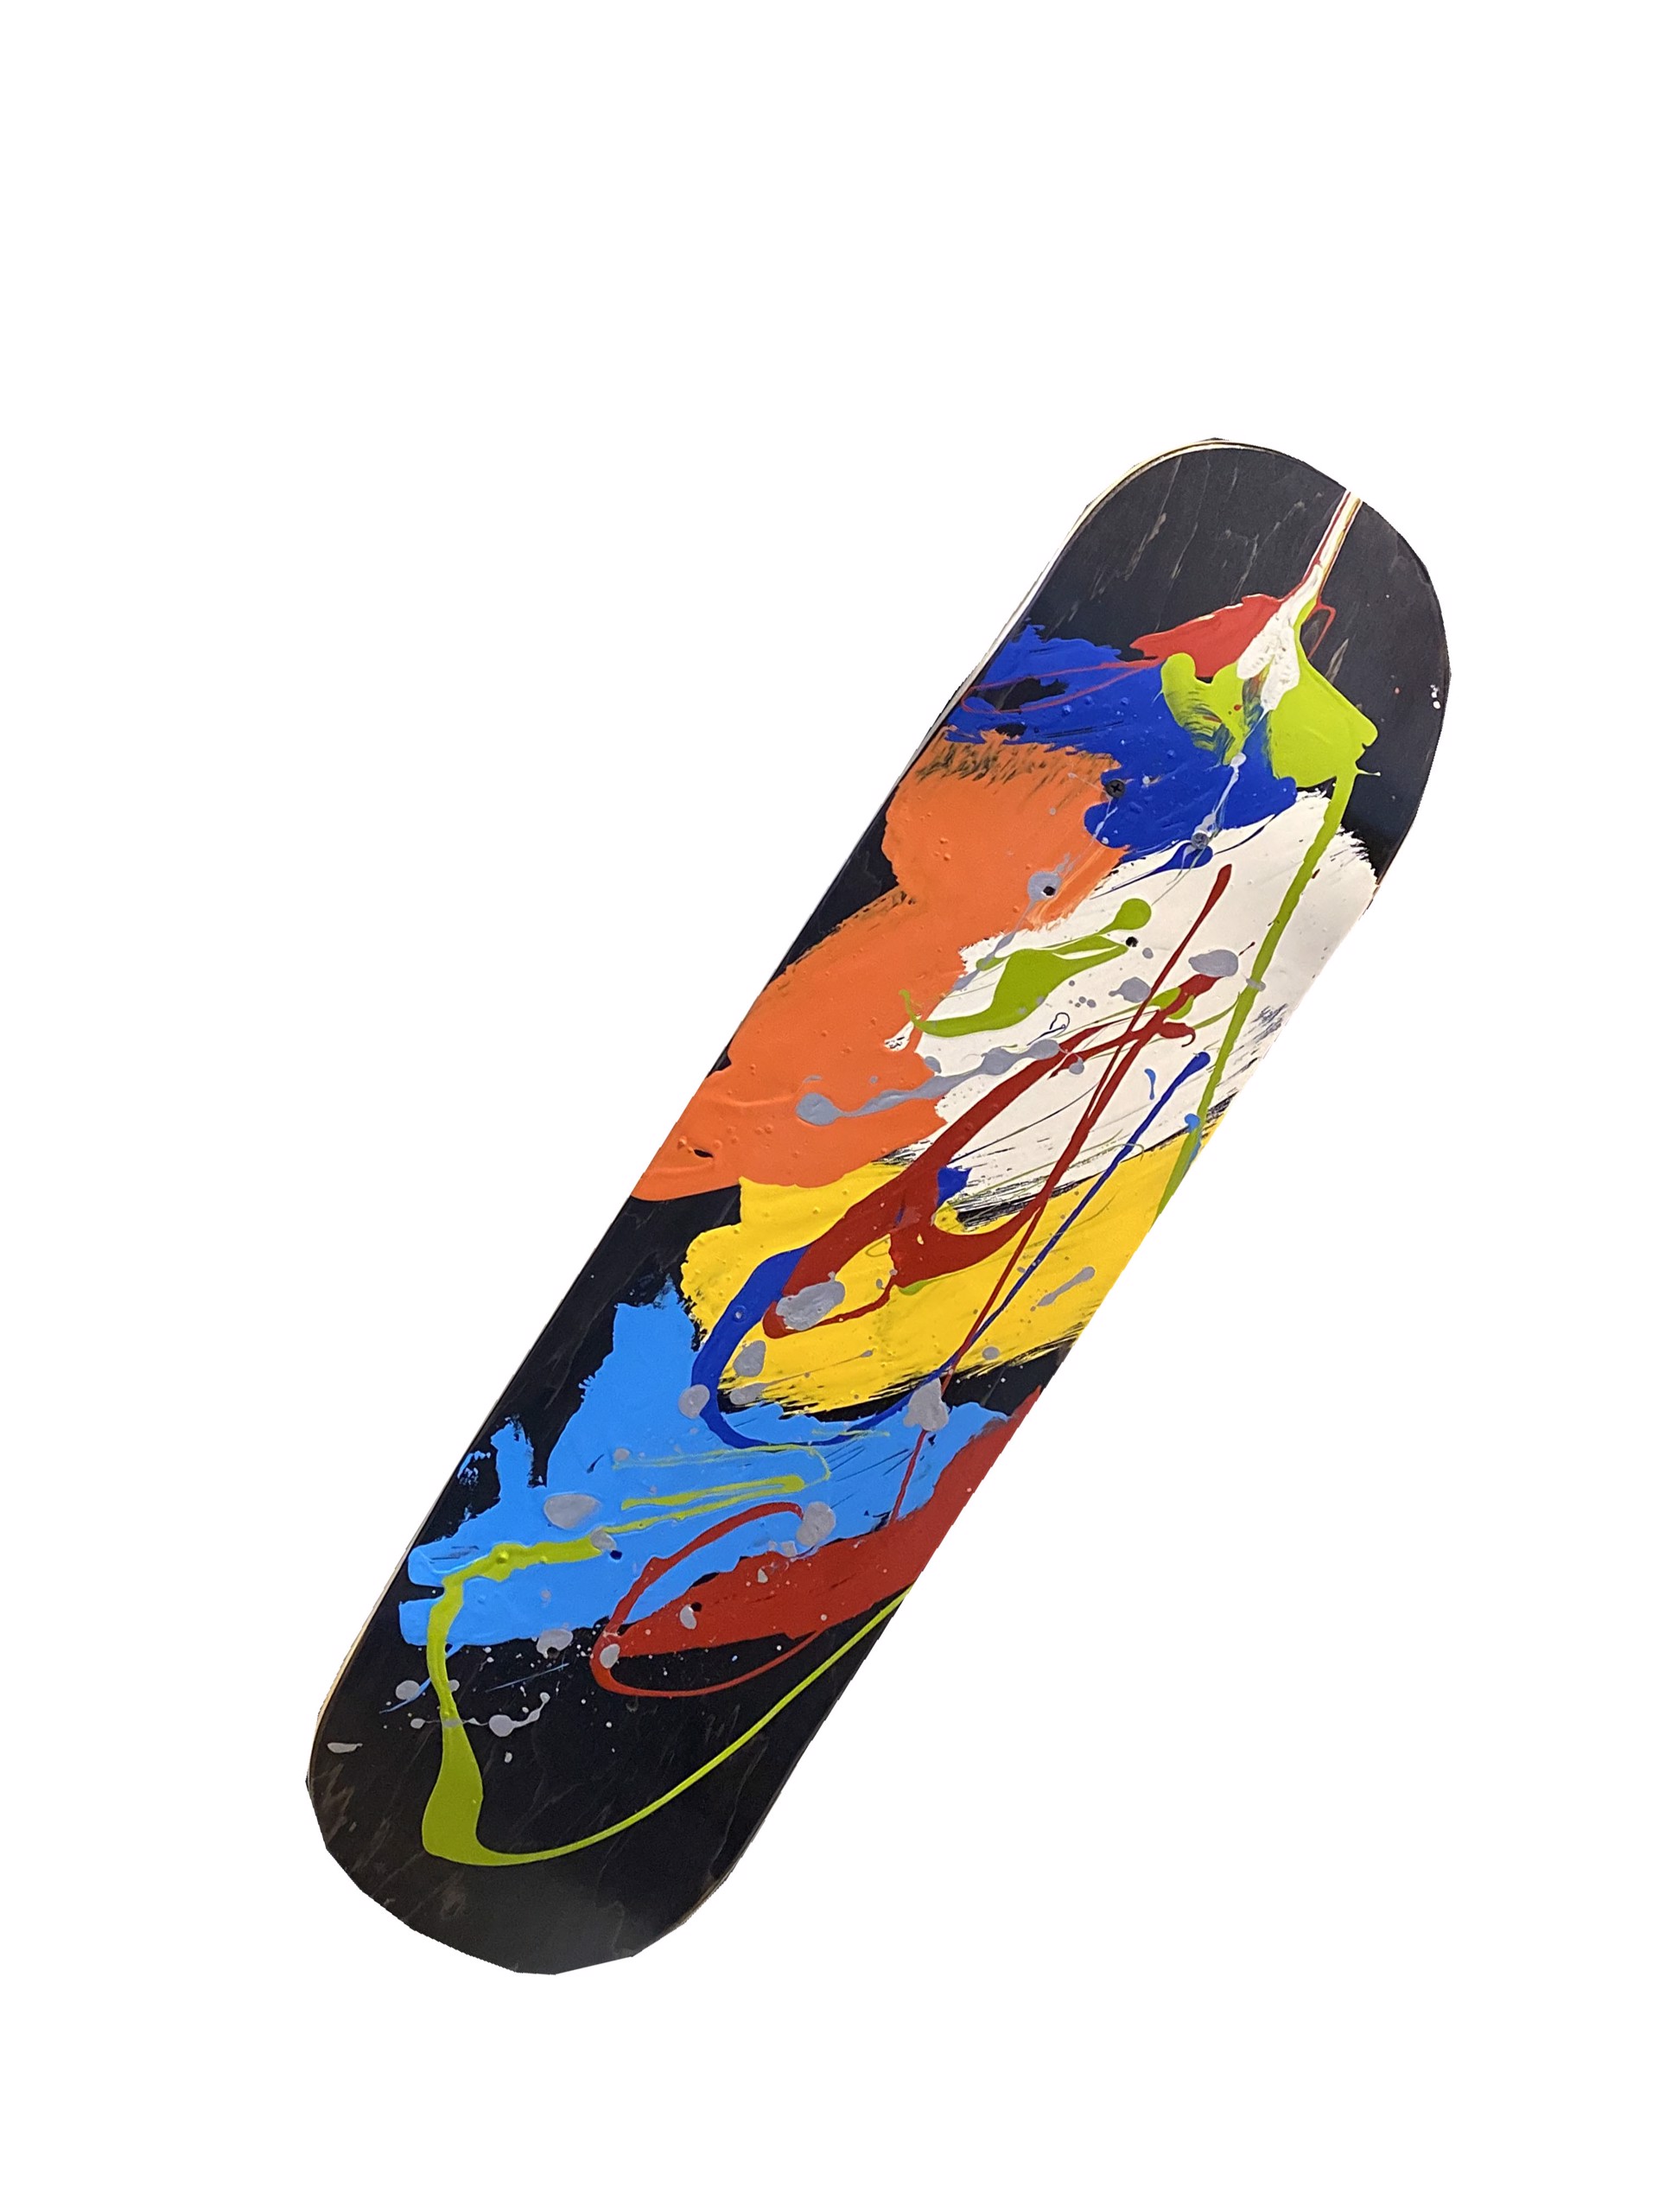 Skateboard XI by Abstract Skateboards Wall Sculptures by Elena Bulatova